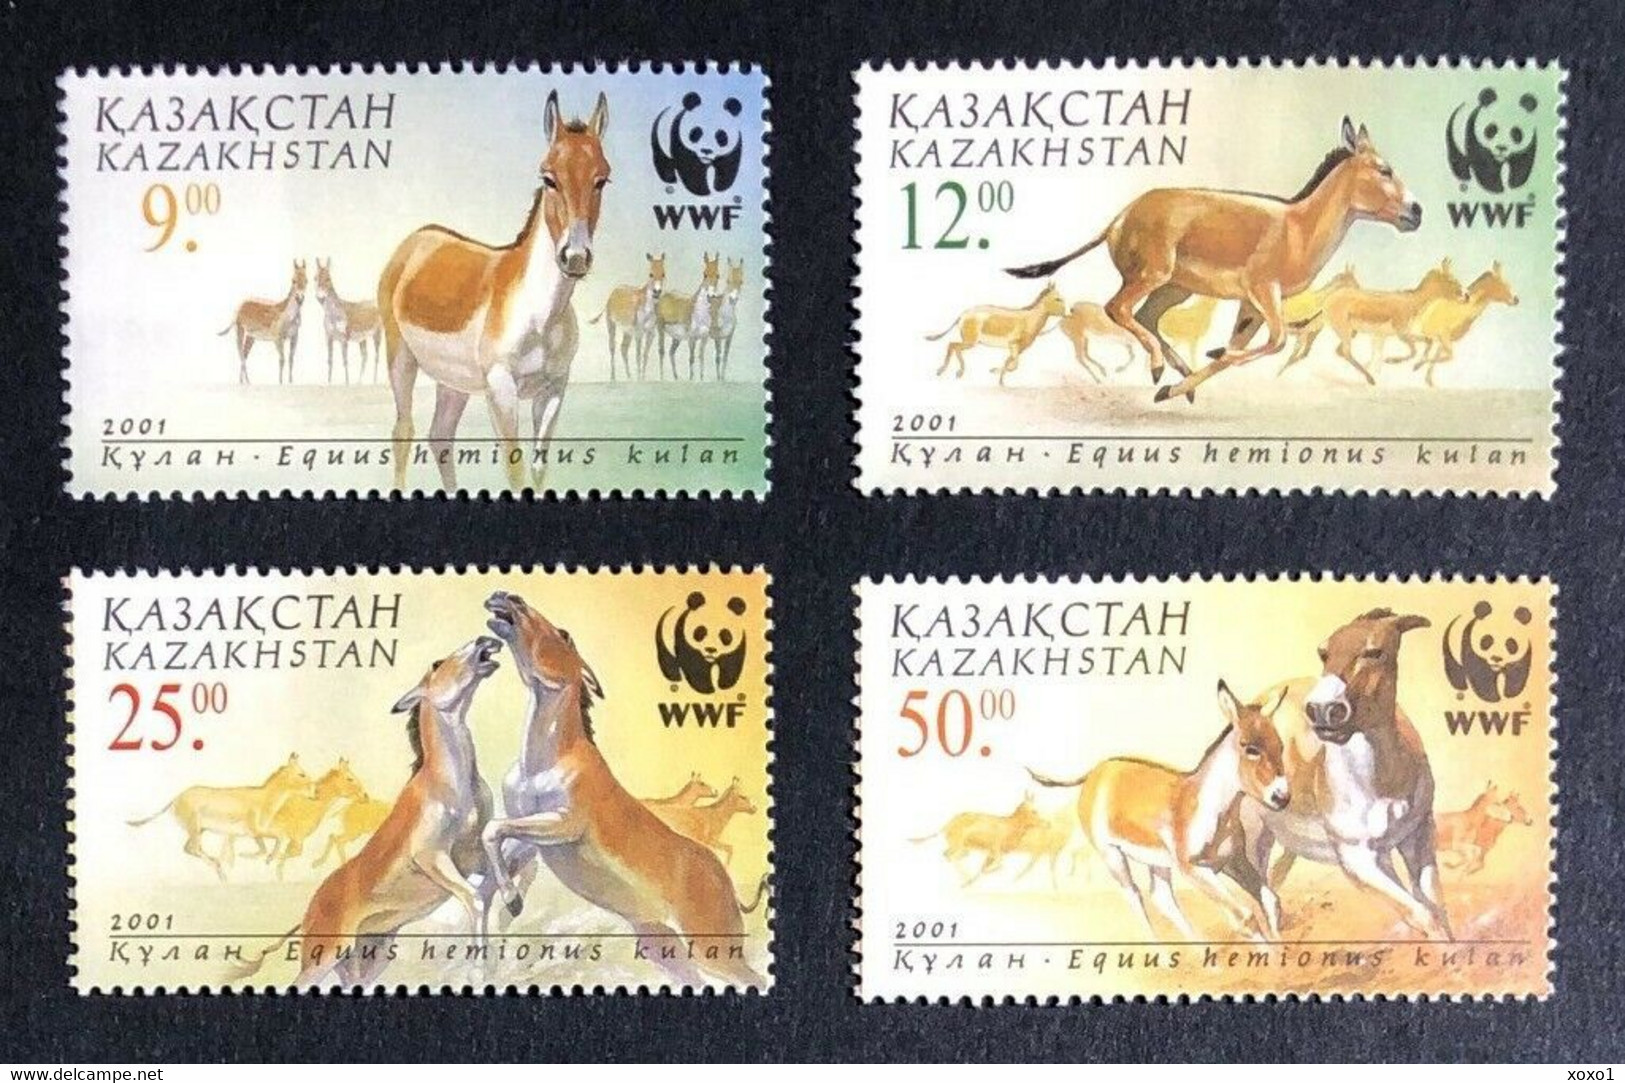 Kazakhstan 1997 MiNr. 345 - 348  Kasachstan  Animals Mammals Onager WWF 4v MNH** 5.00 € - Asini